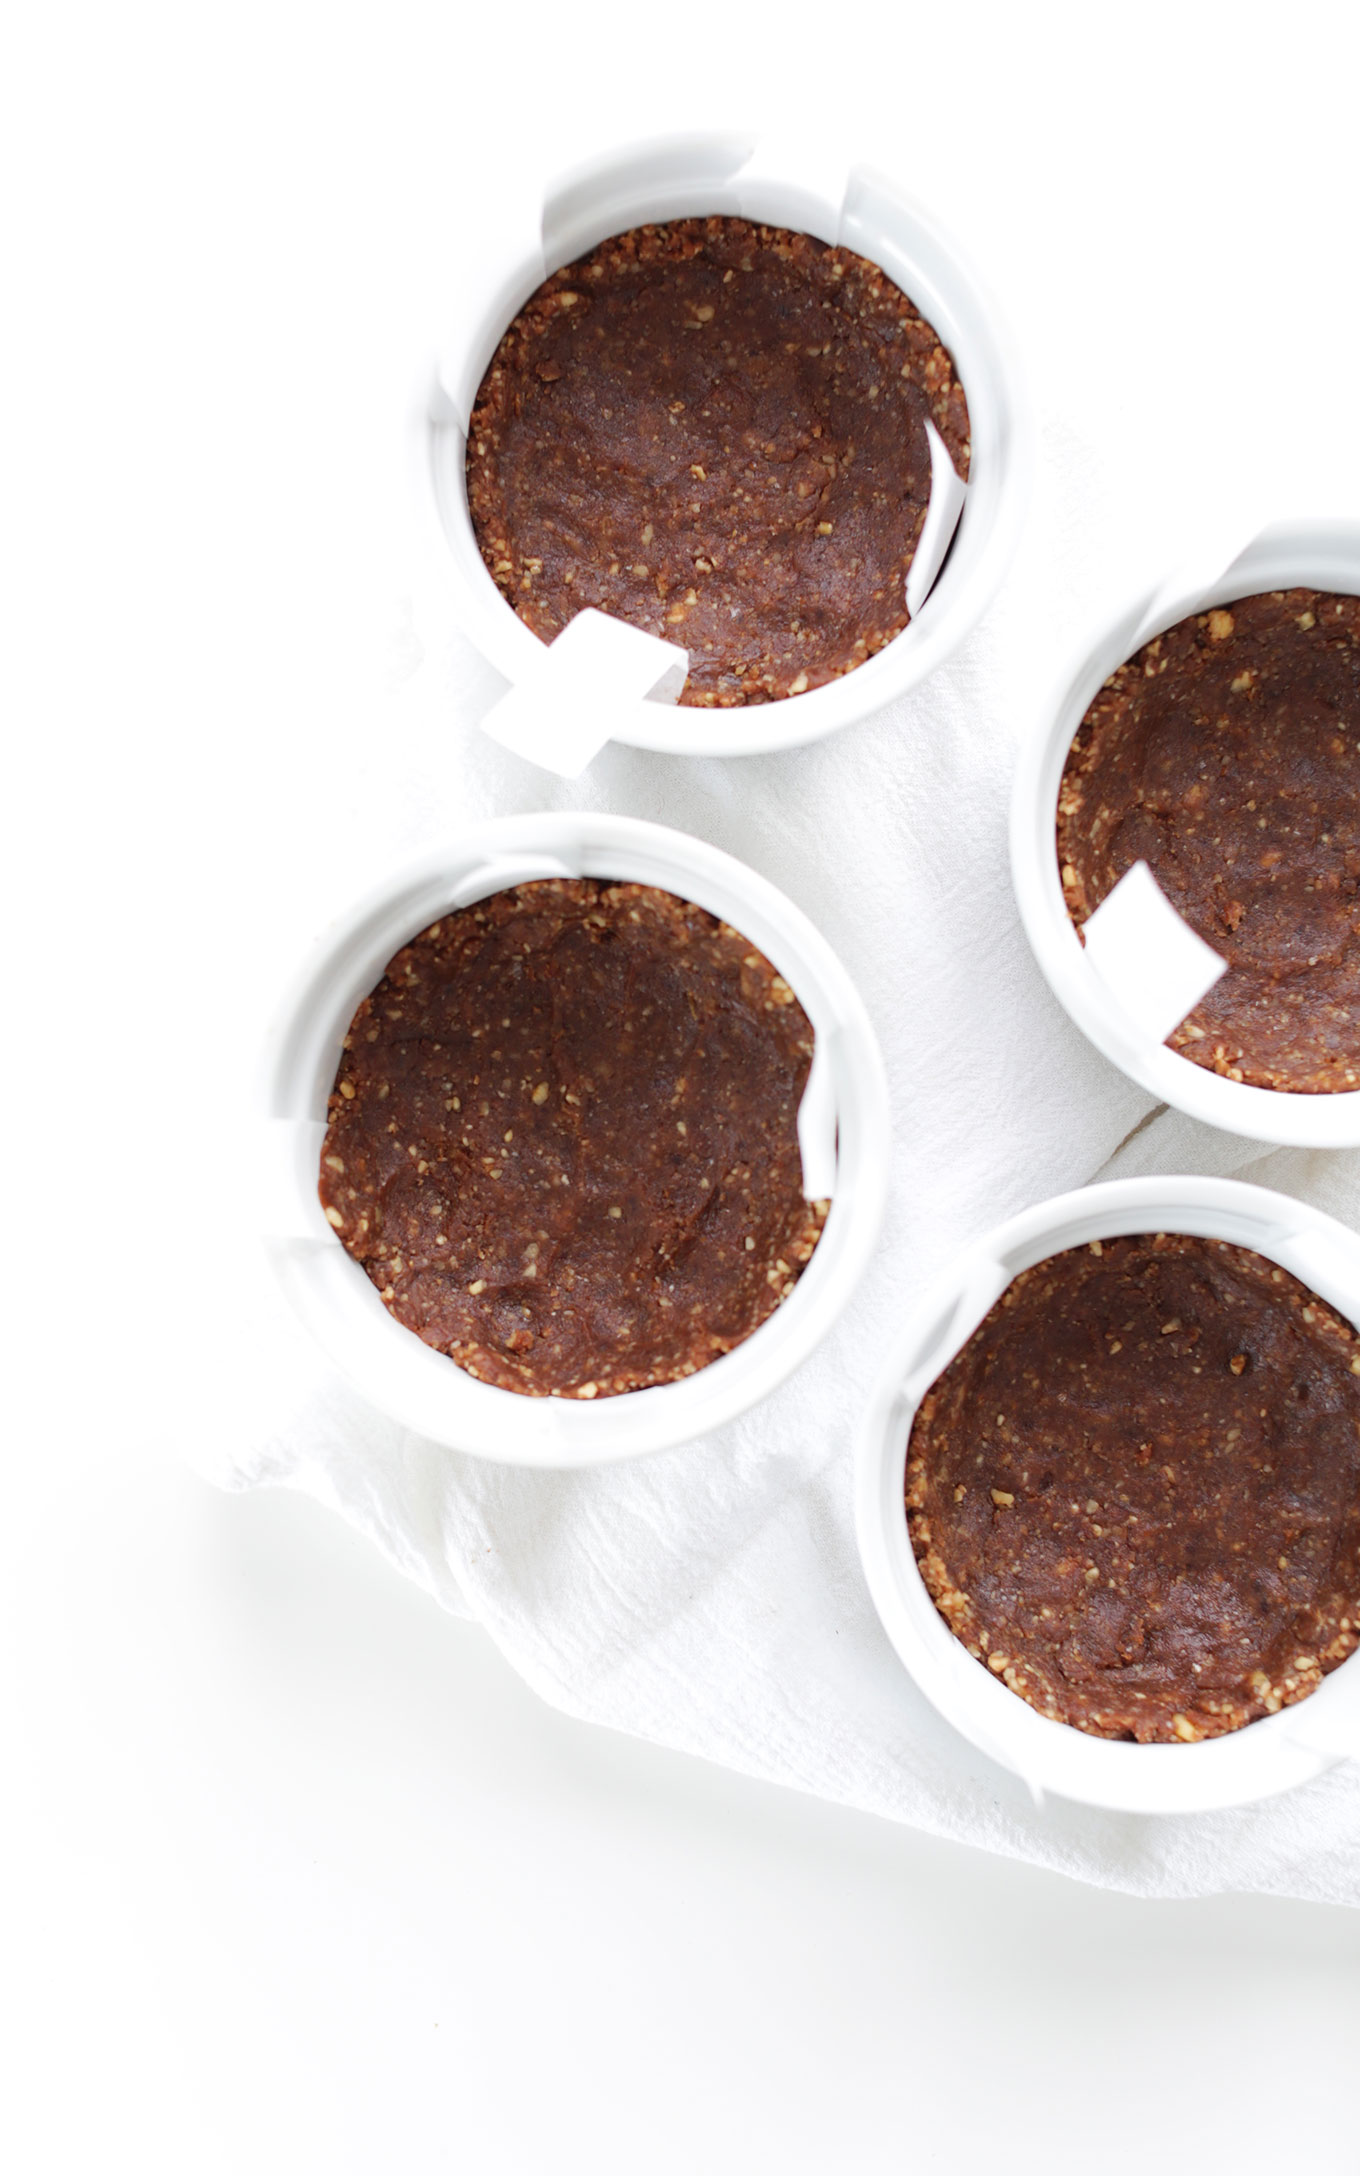 Ramekins filled with gluten-free vegan Chocolate Date Walnut Crust